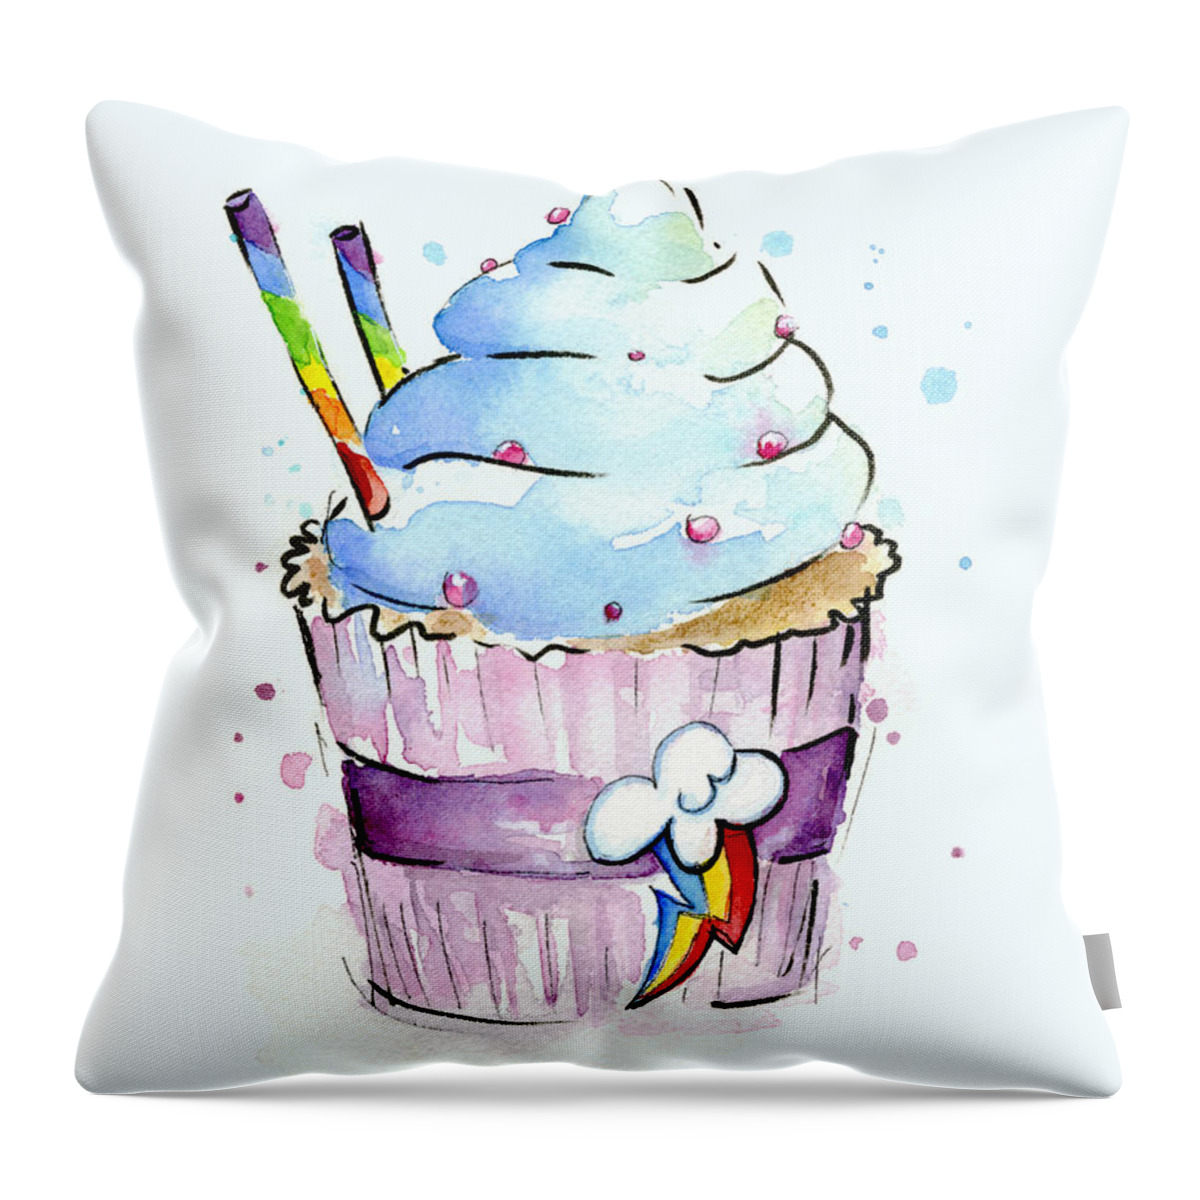 Rainbow Throw Pillow featuring the painting Rainbow-Dash-Themed Cupcake by Olga Shvartsur